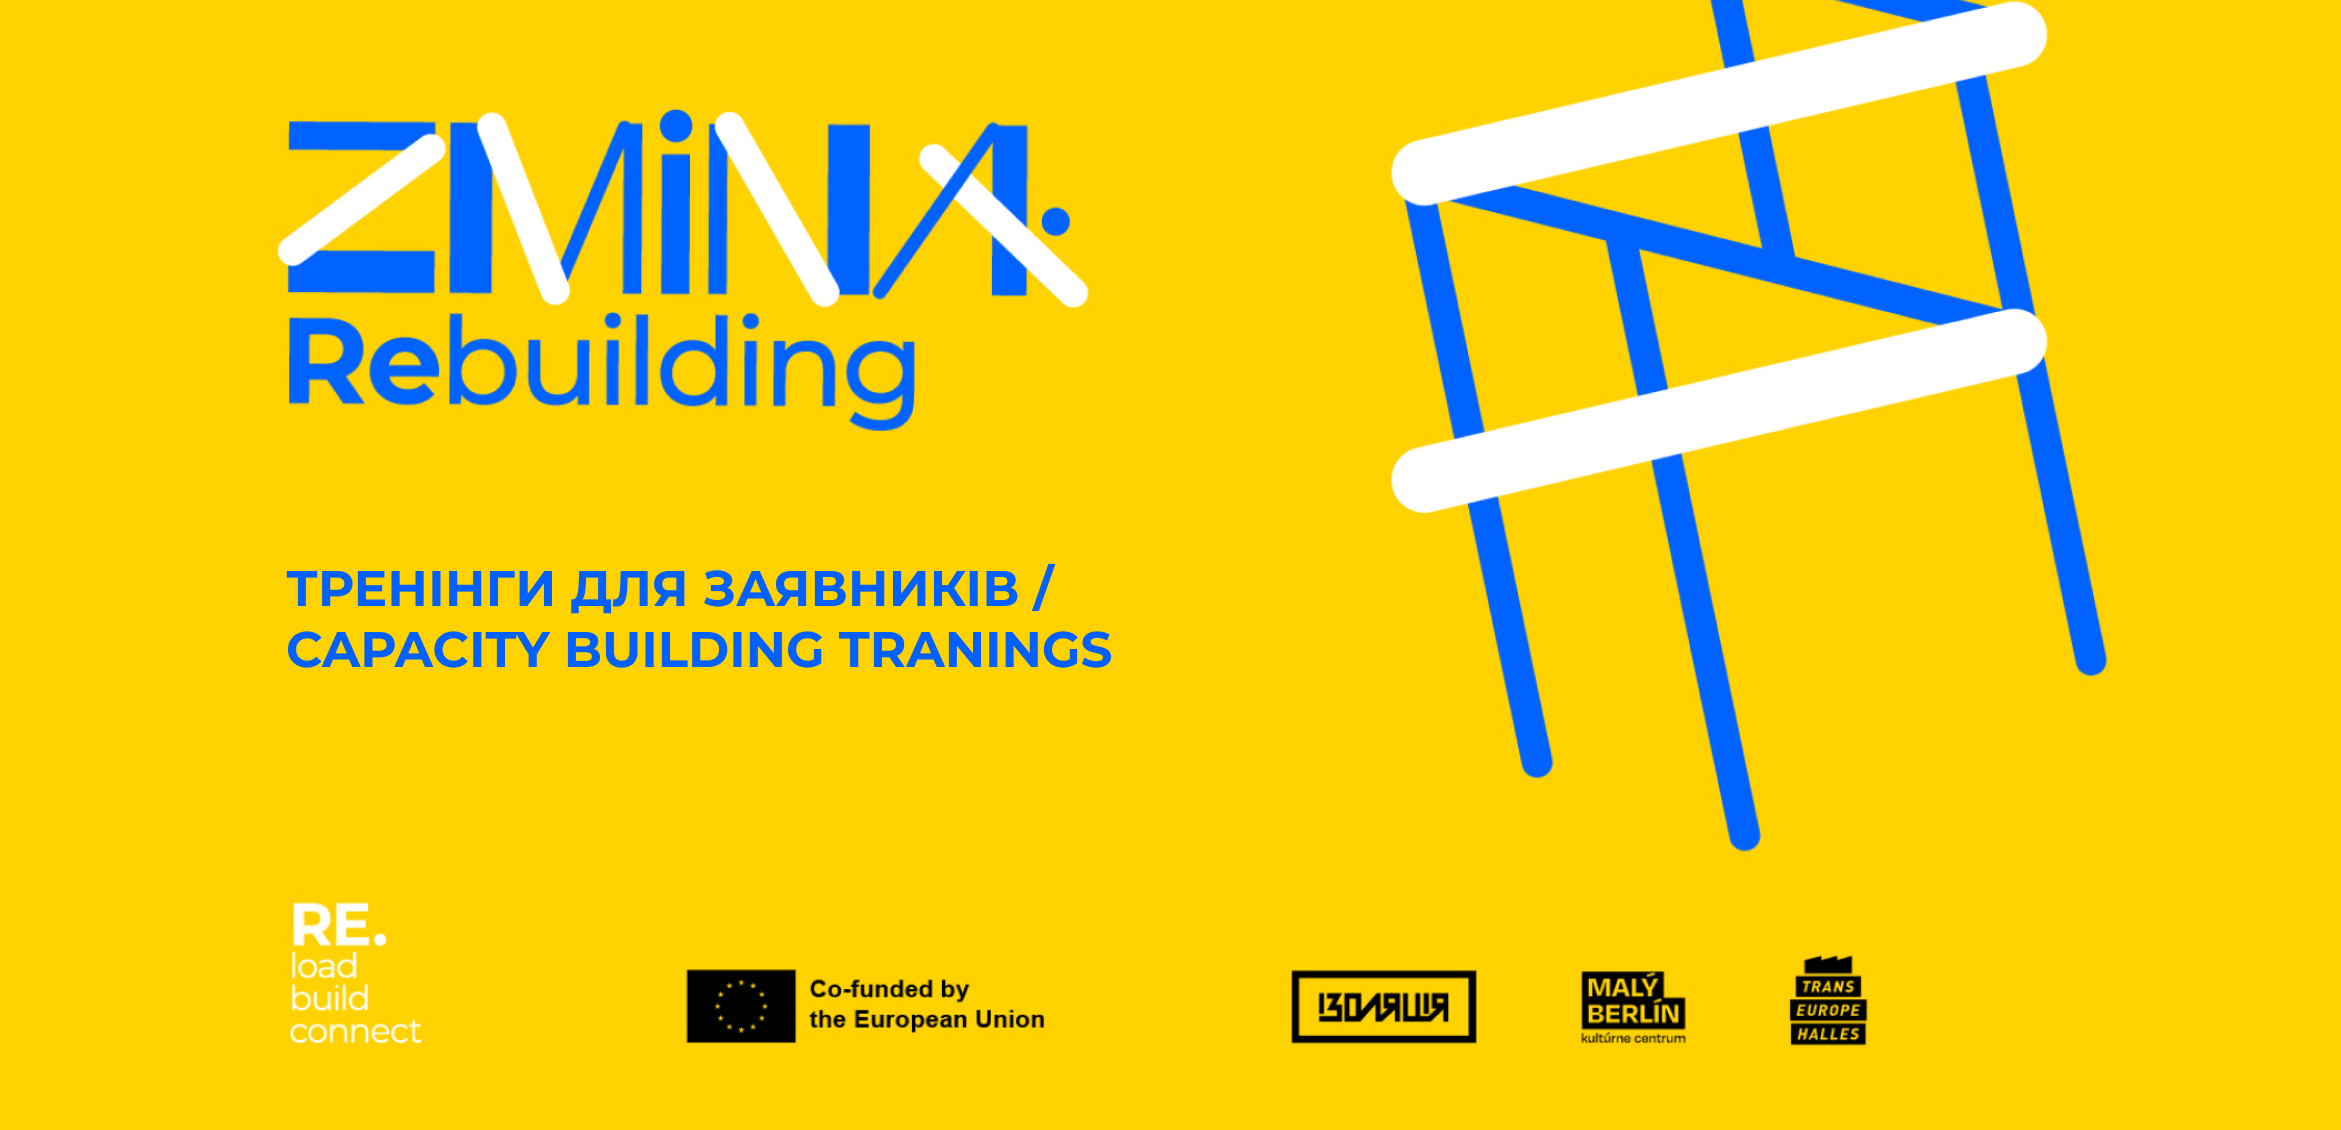 ZMINA: Rebuilding. Capacity building trainings for organizations